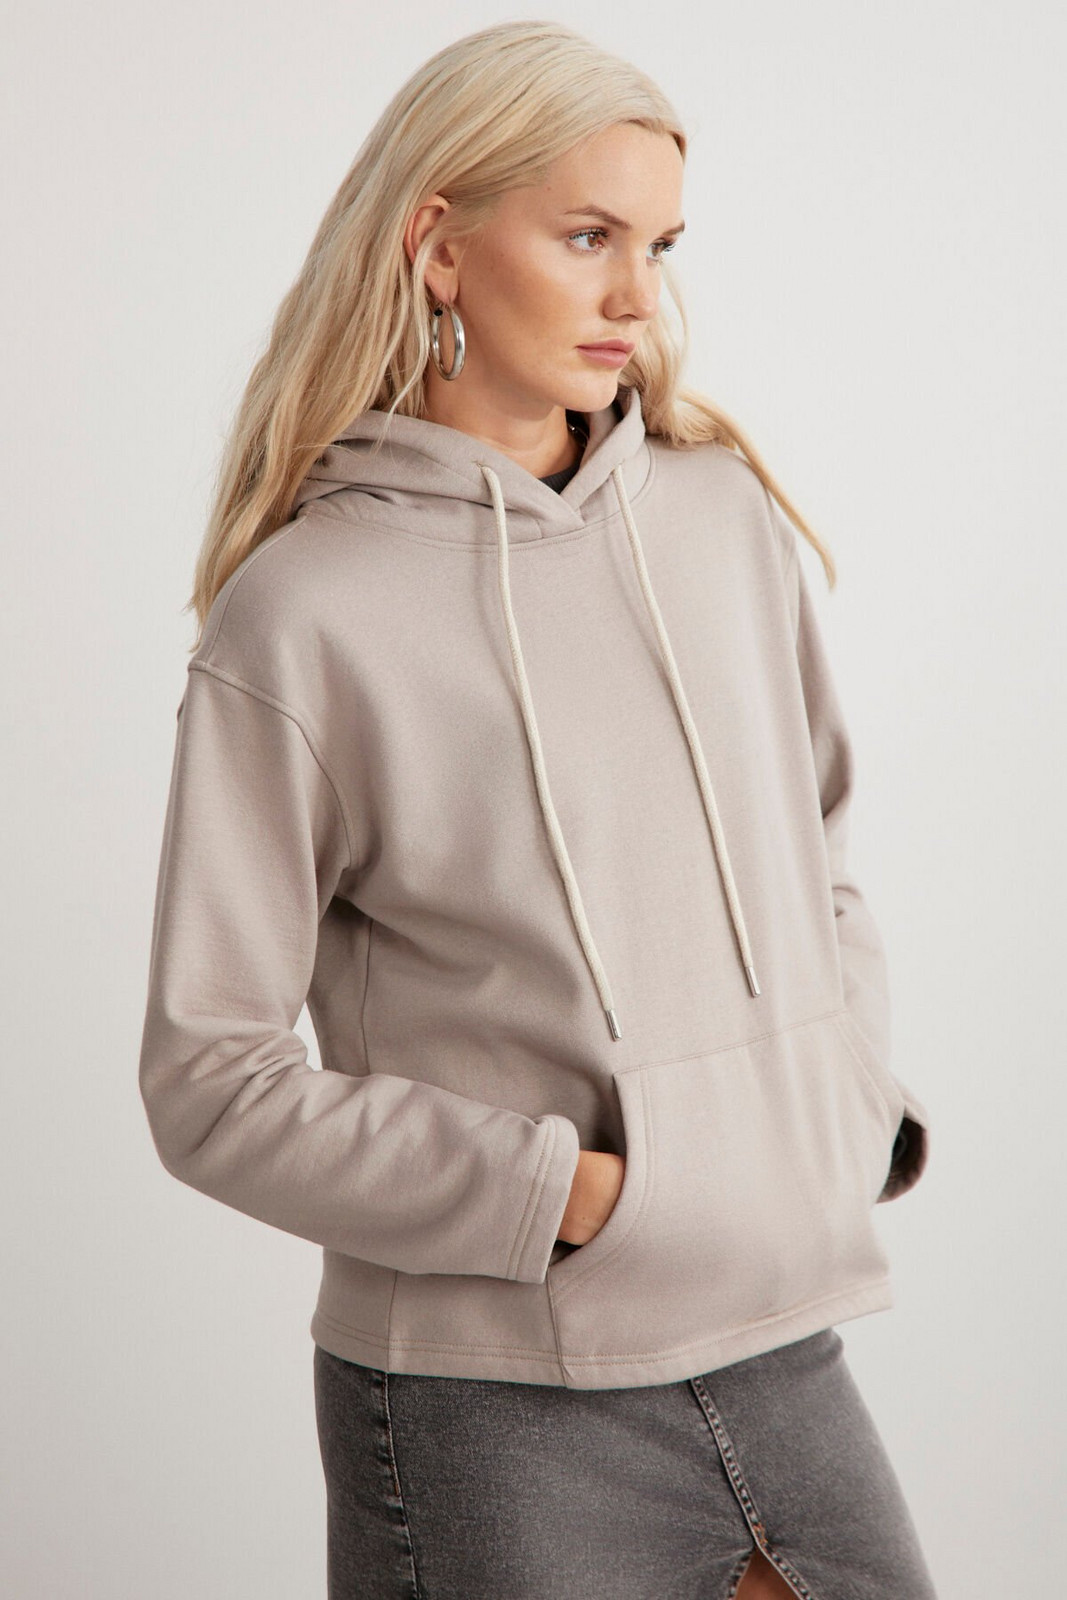 GRIMELANGE Gayle Women's Hooded Relaxed Fit Basic Beige Sweatshirt with Fleece Inside